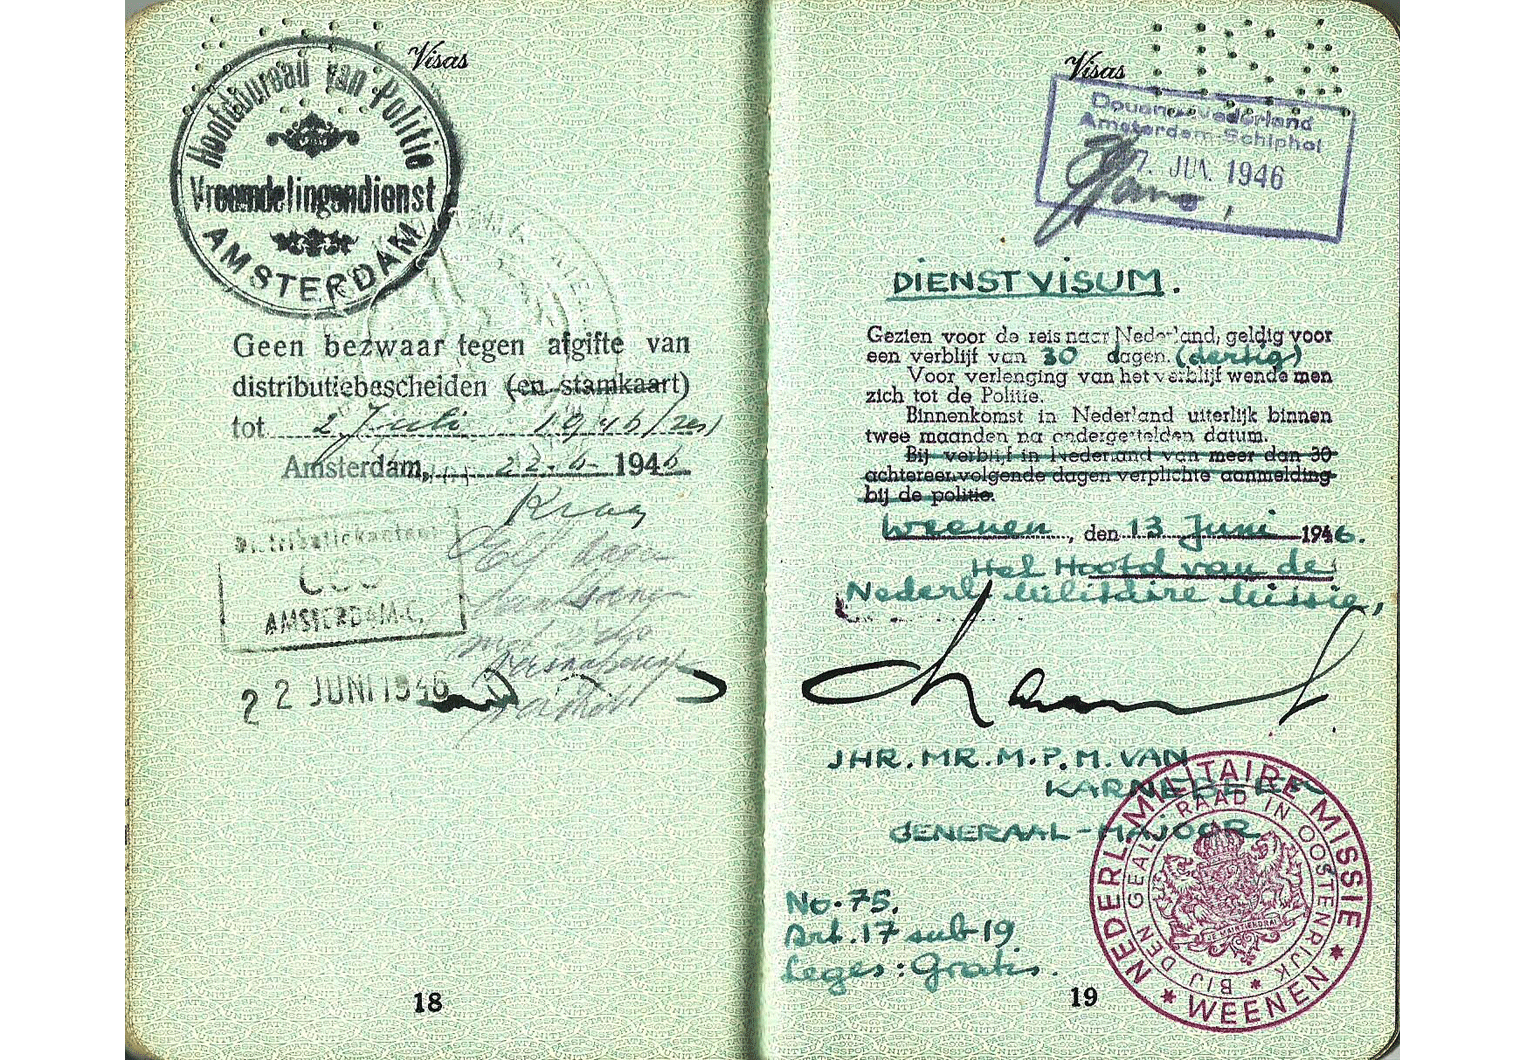 WW2 military mission visa